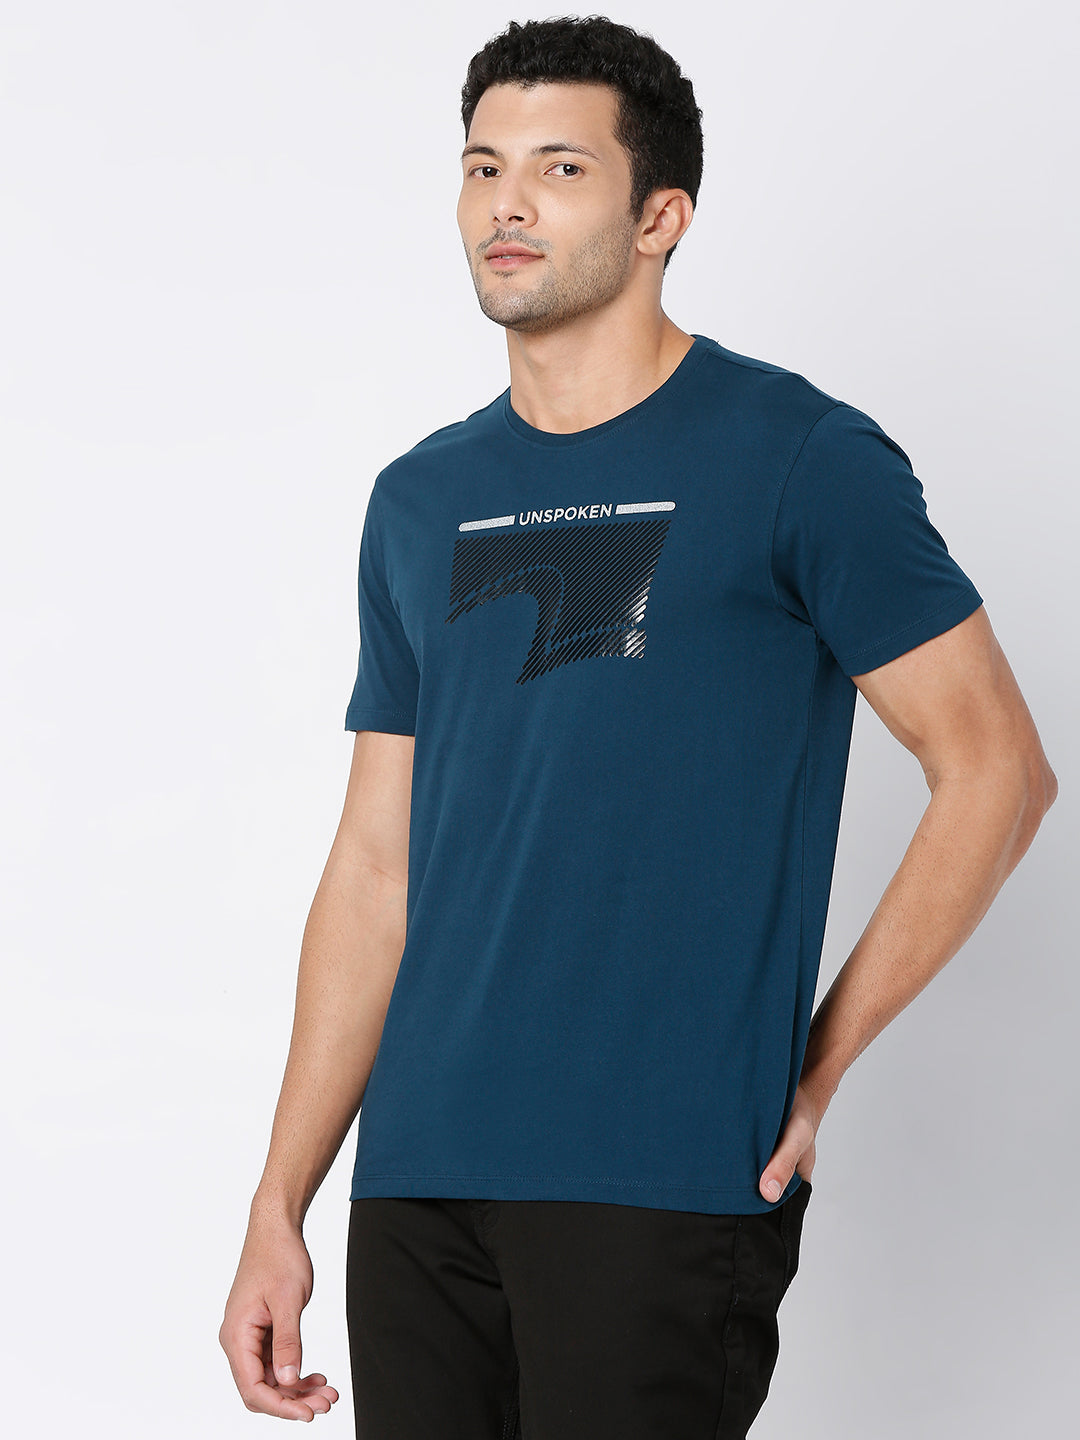 Spykar Teal Blue Cotton Half Sleeve Printed Casual T-shirt For Men